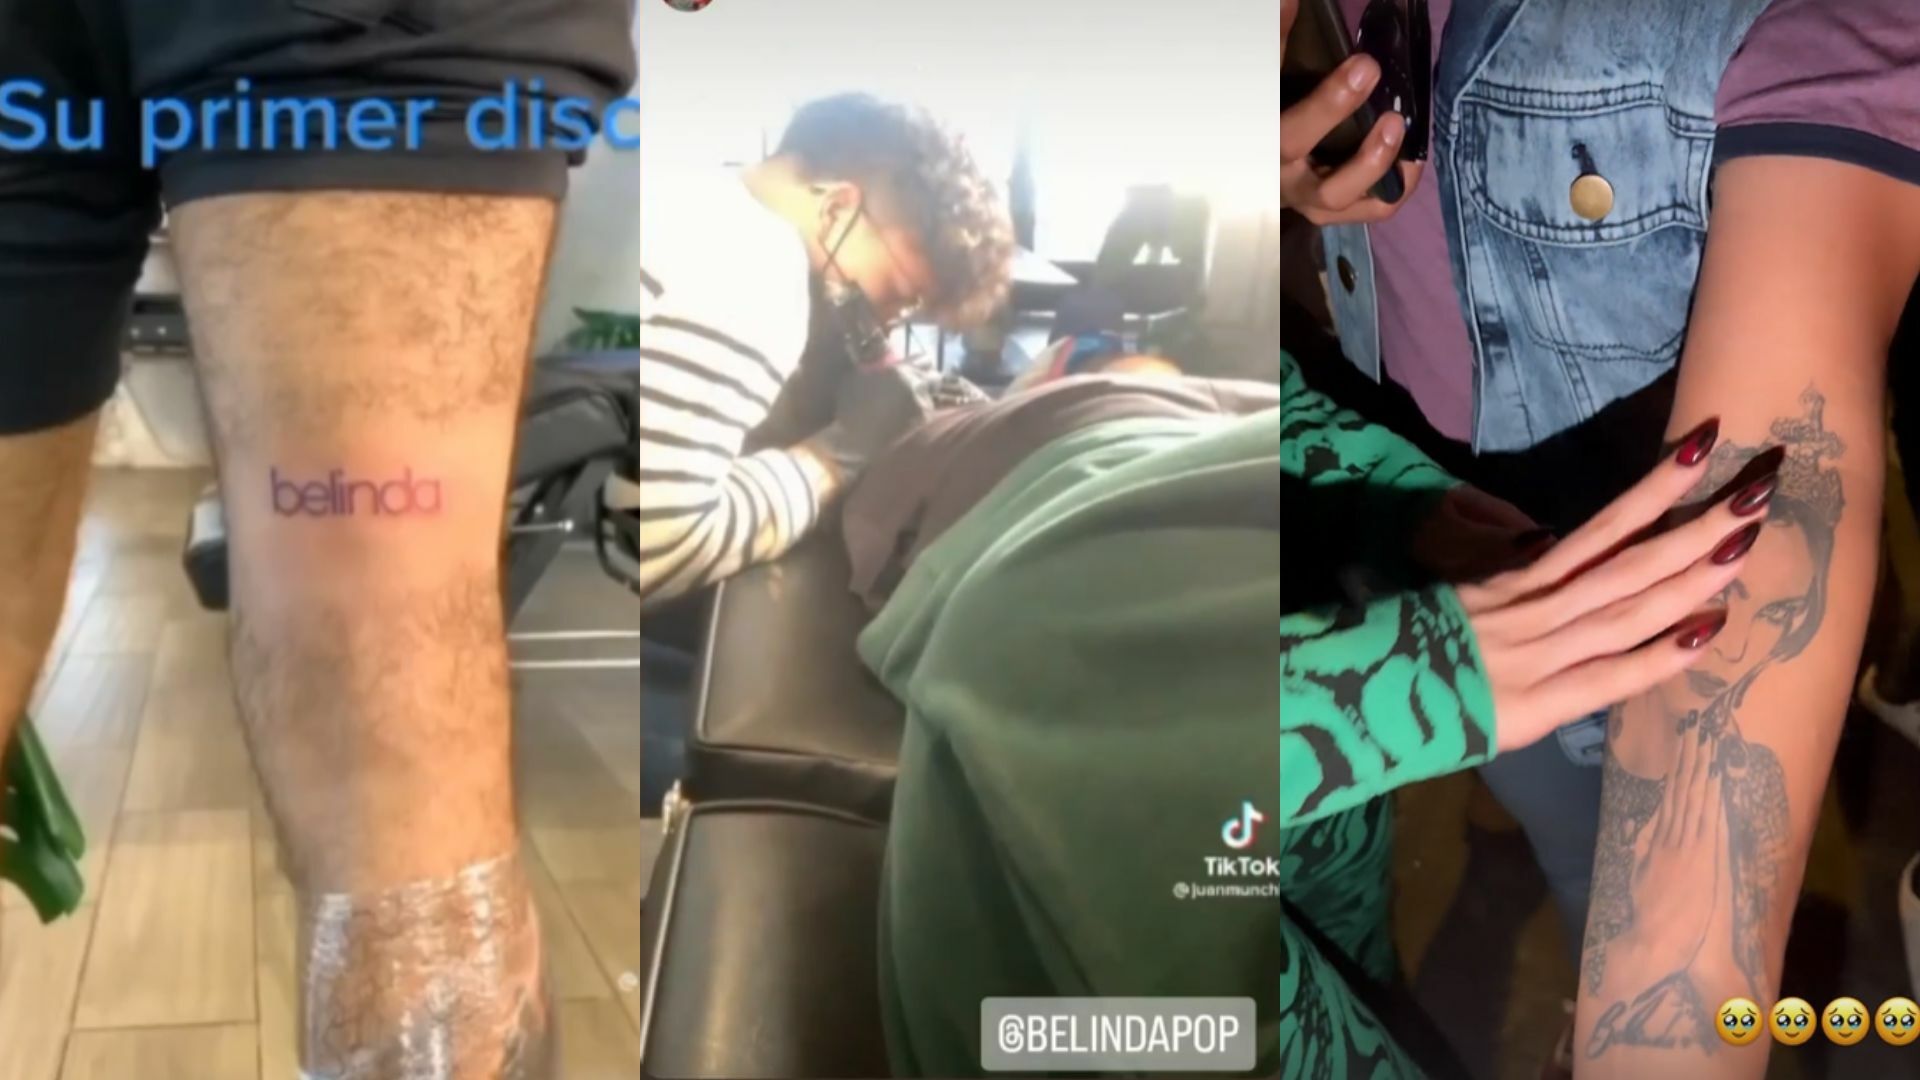 ¡Sí funcionó el rezo! Hombres comparten en redes sus tatuajes de Belinda